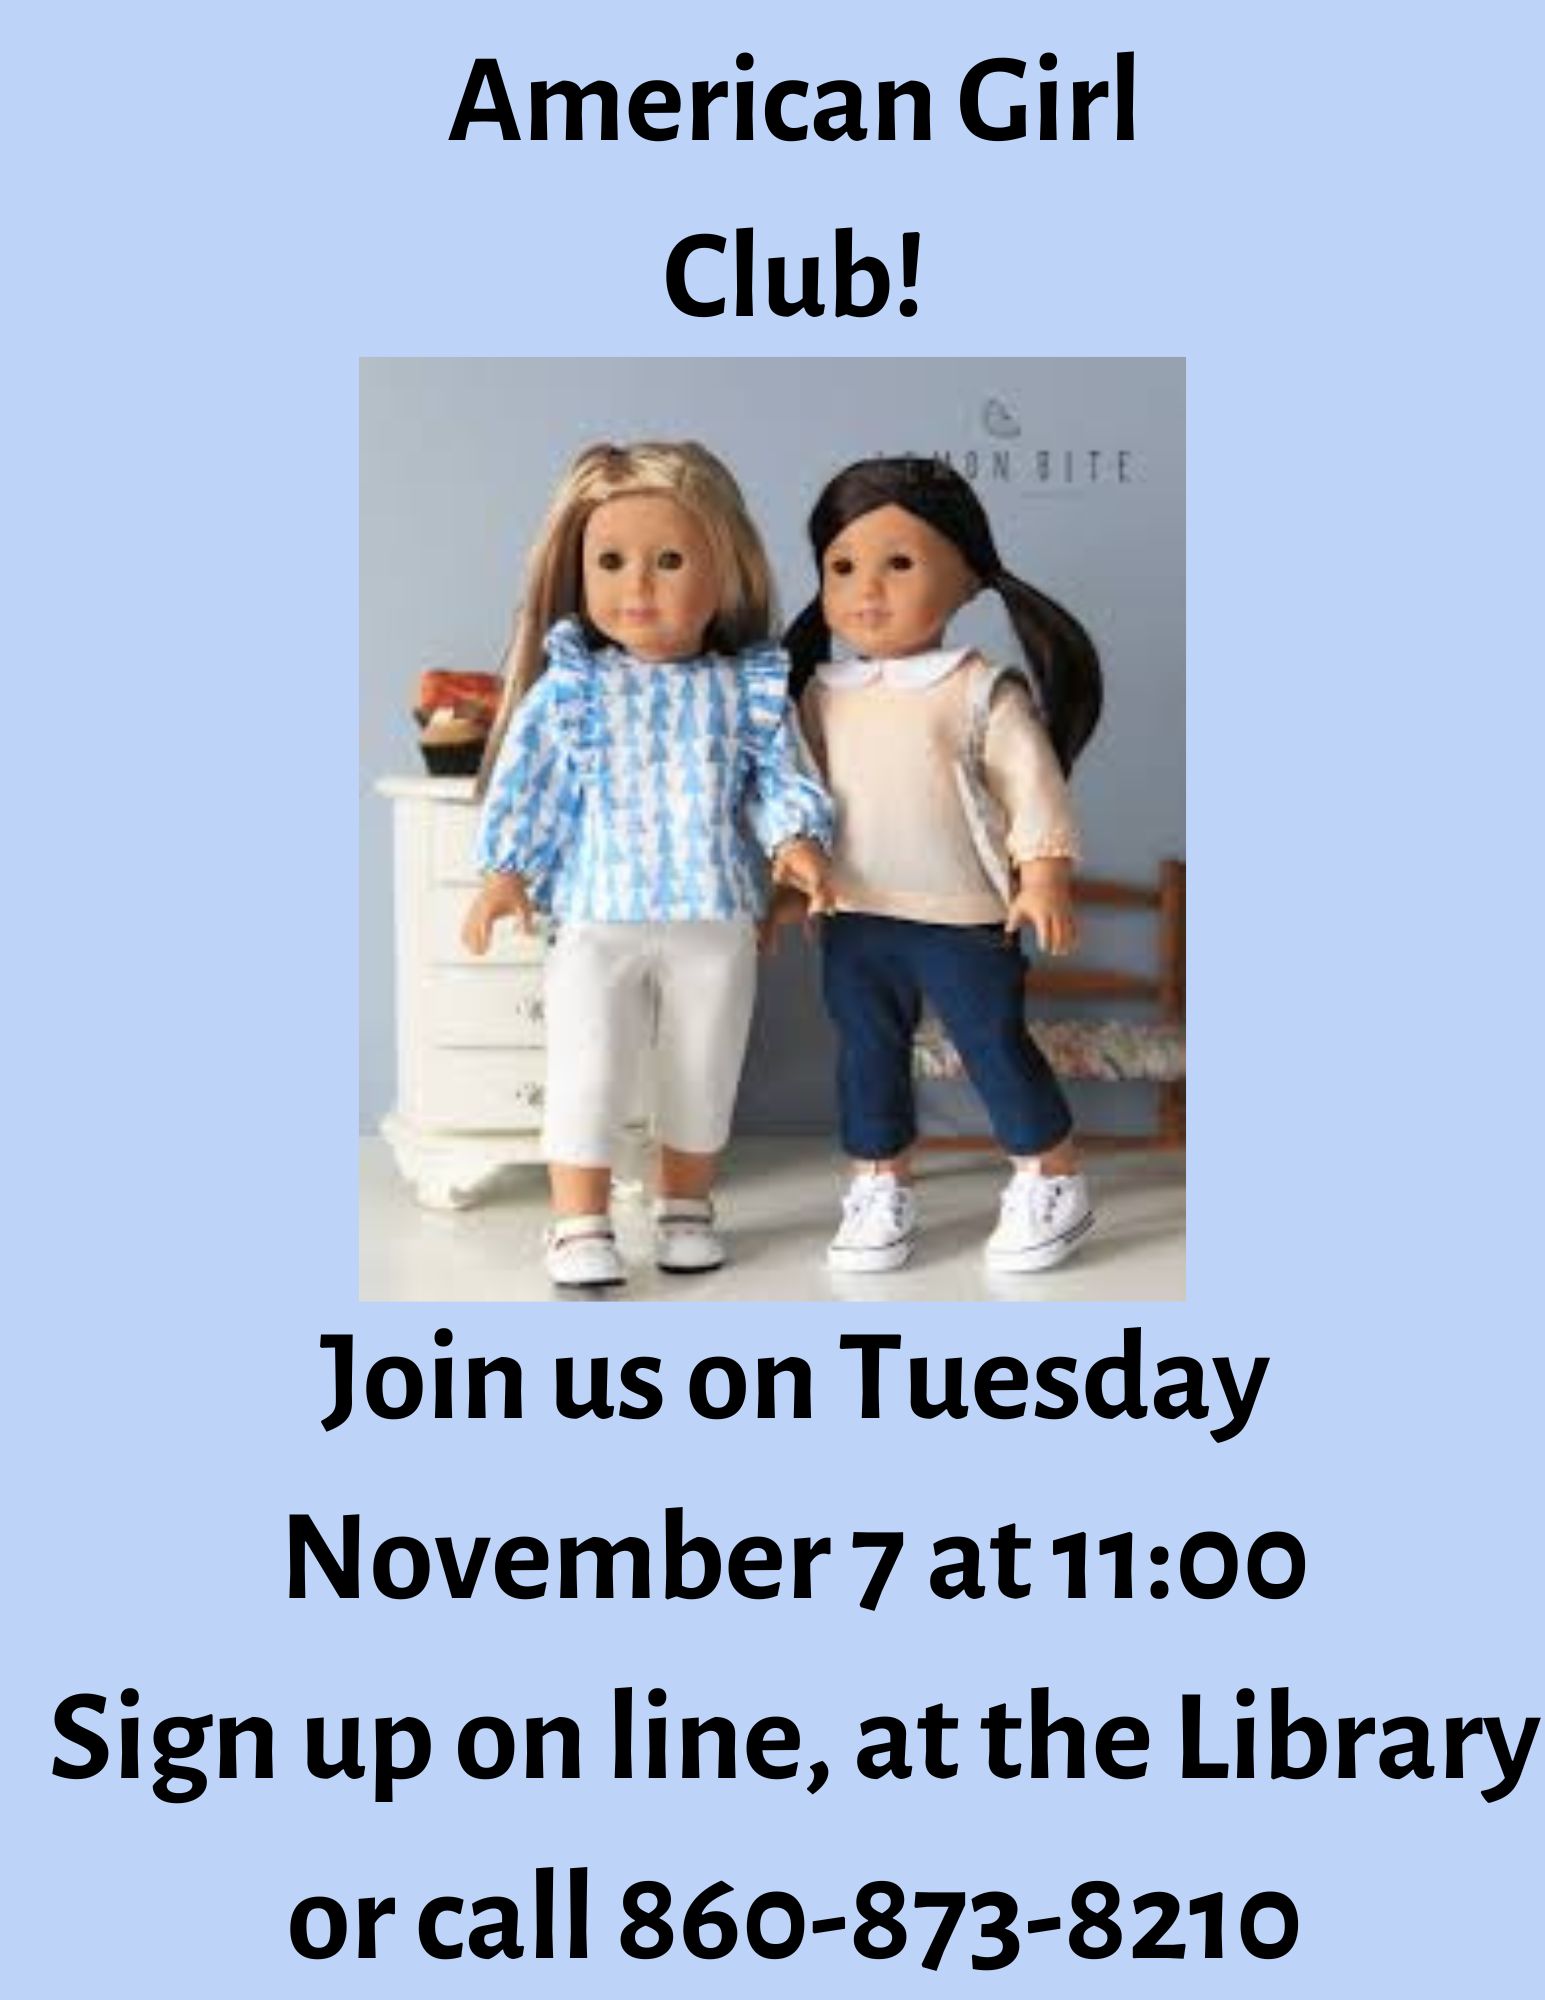 American Girl Club at the Rathbun Library